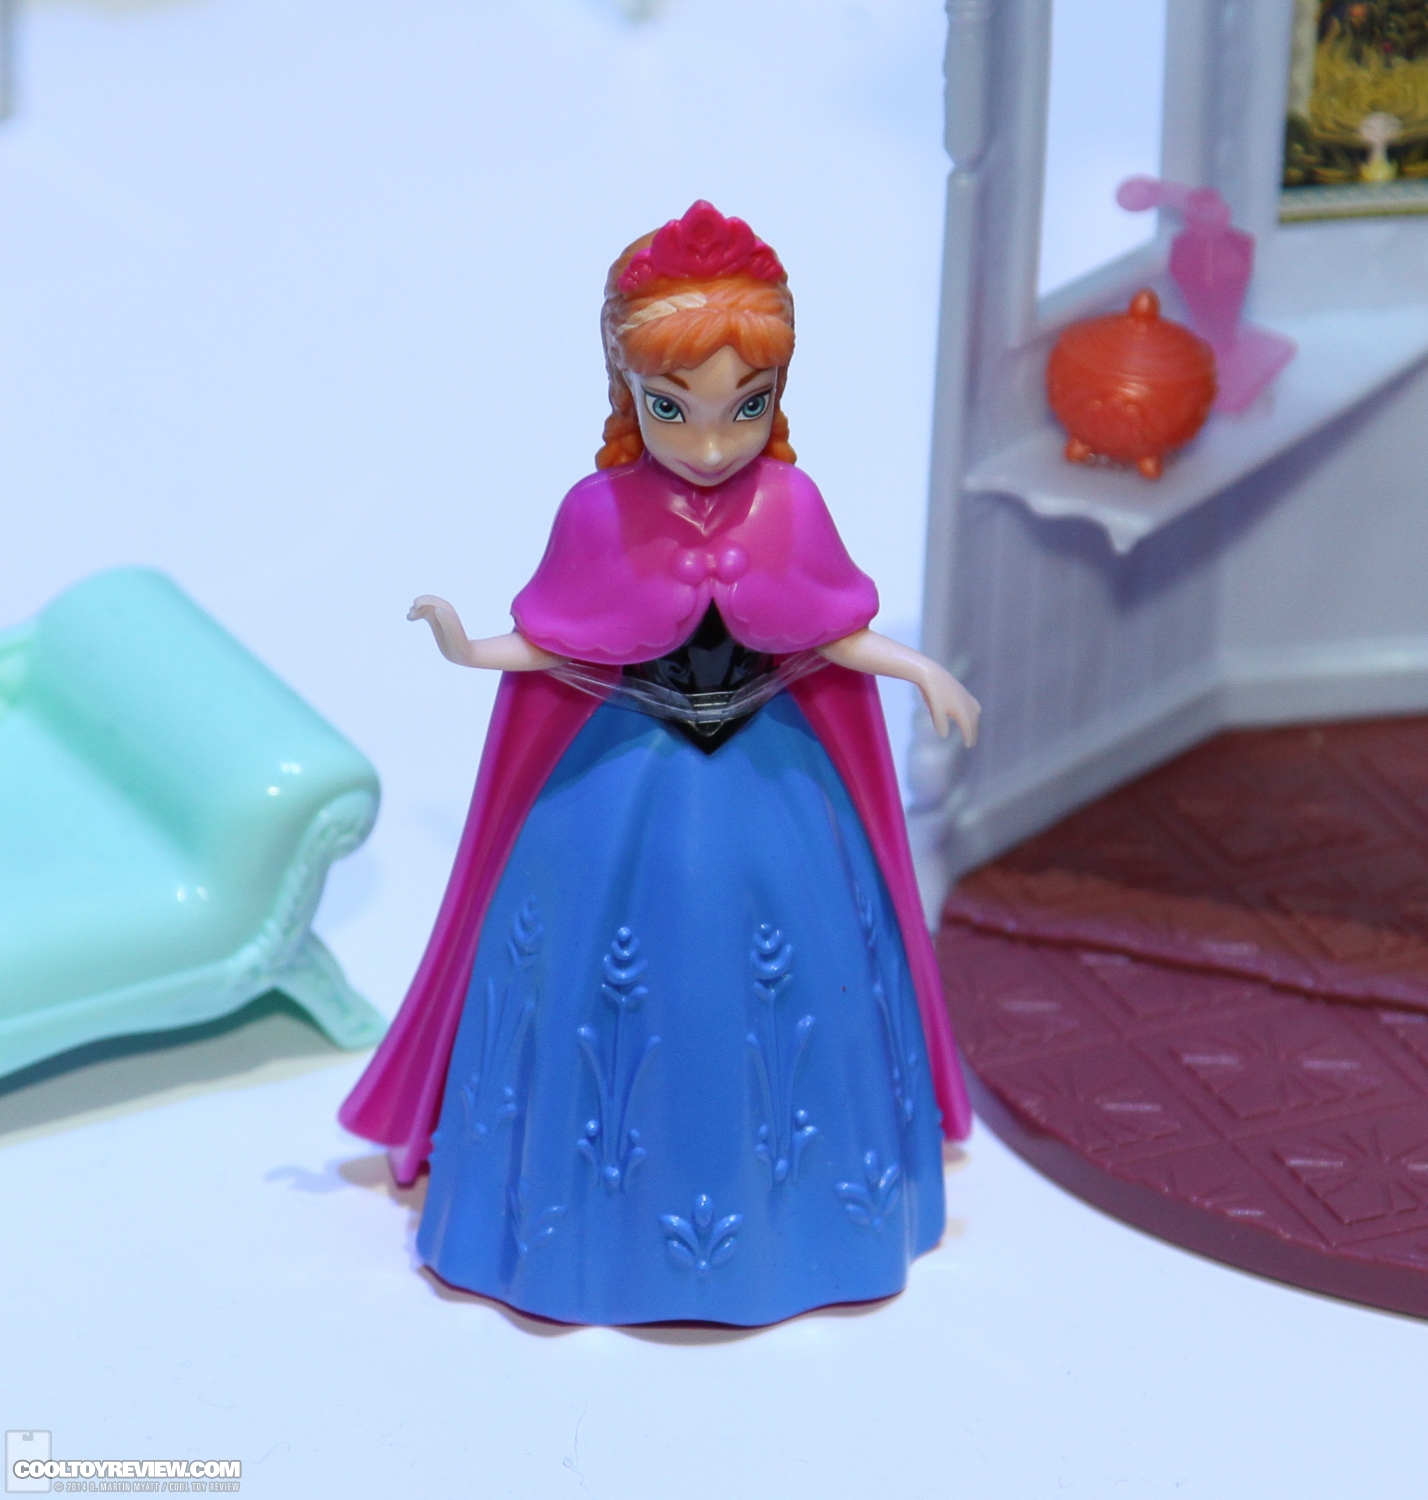 Toy-Fair-2014-Mattel-Showroom-280.jpg